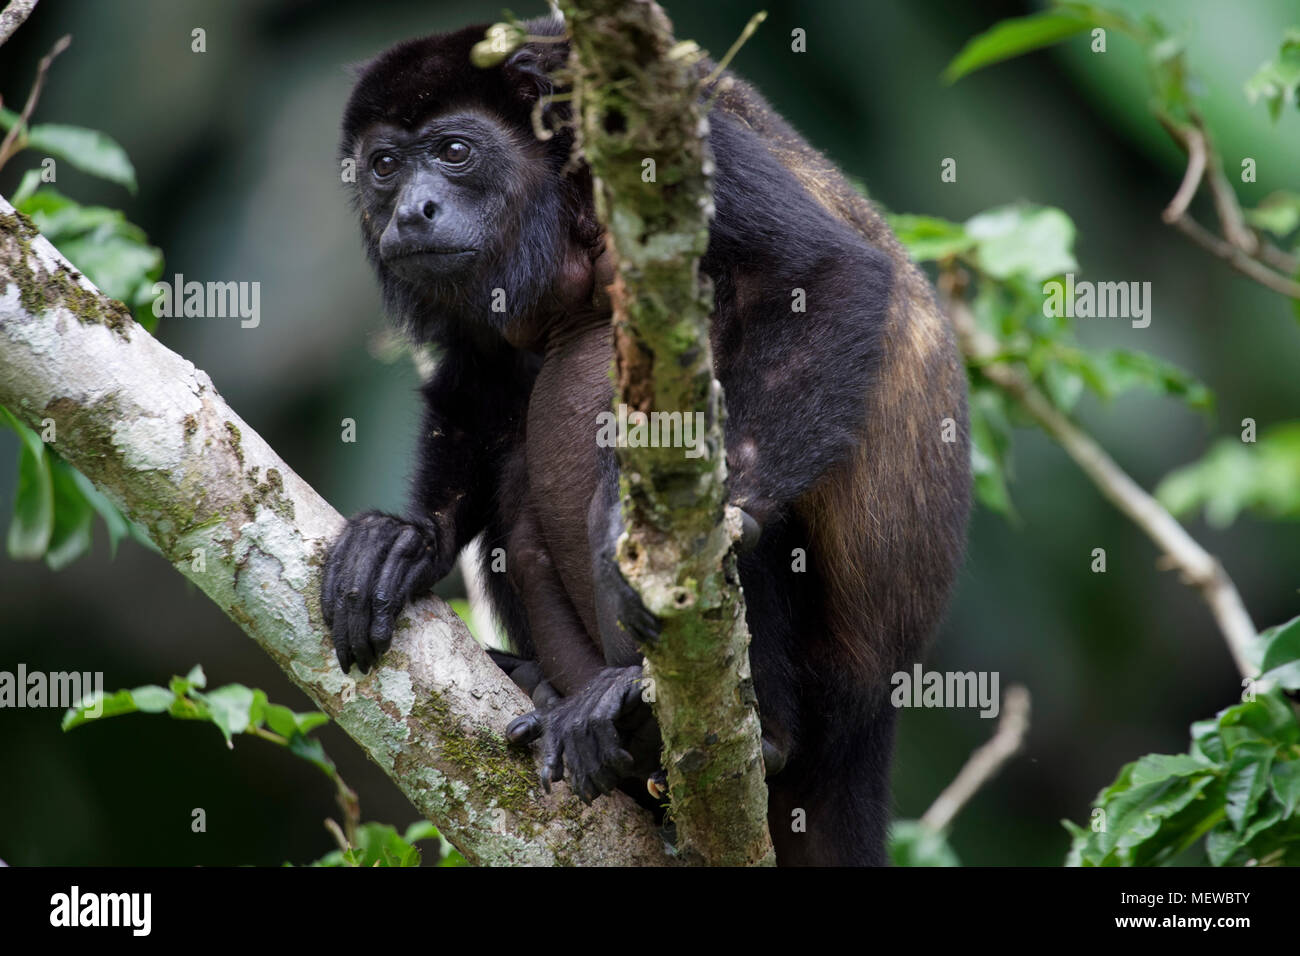 A female Golden Mantled Howler Monkey (Alouatta palliata palliata) observes the environment. Stock Photo